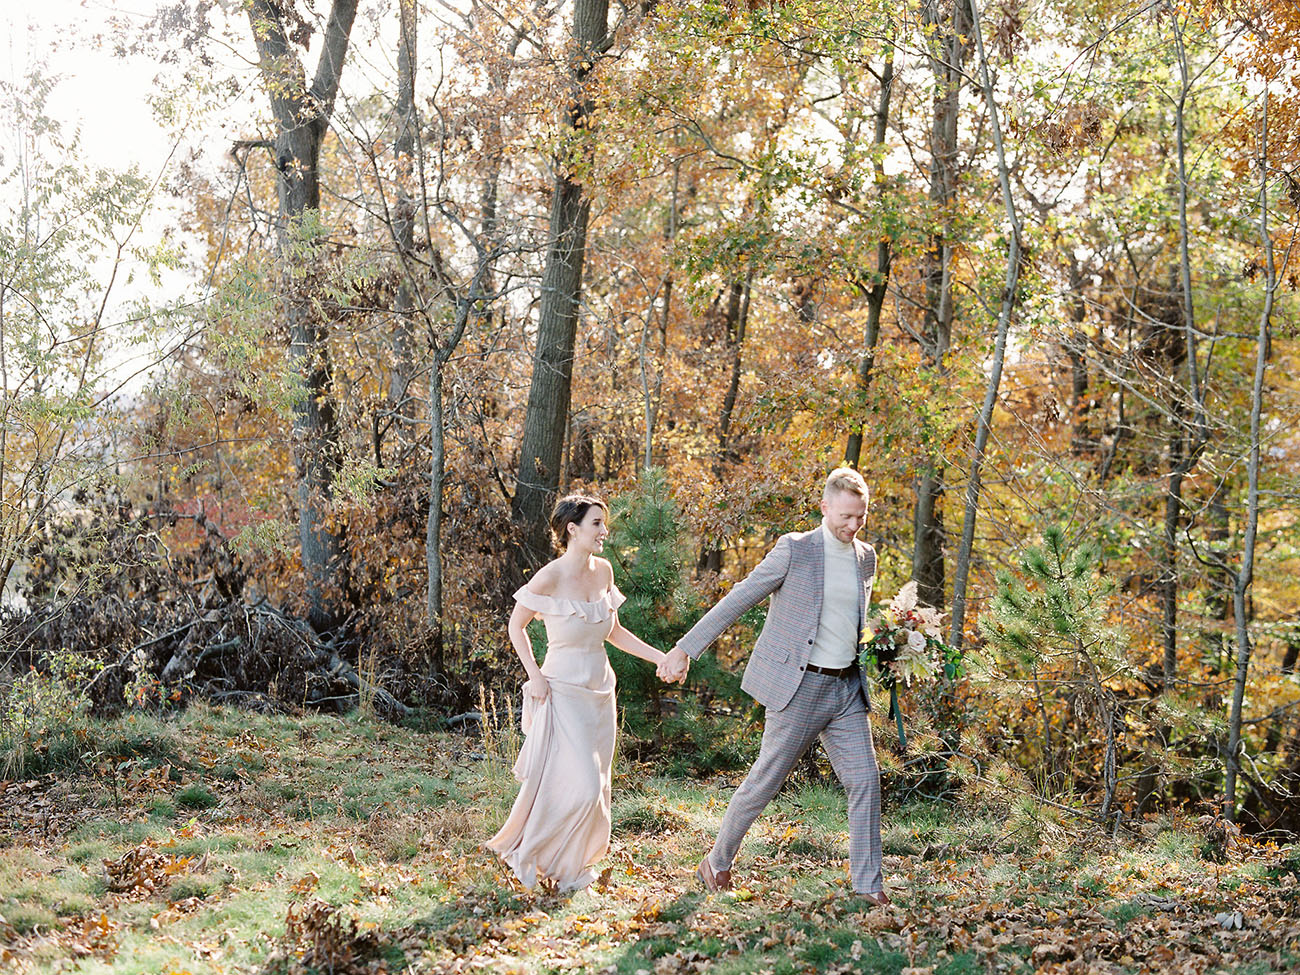 Colorful Fall Wedding Inspiration